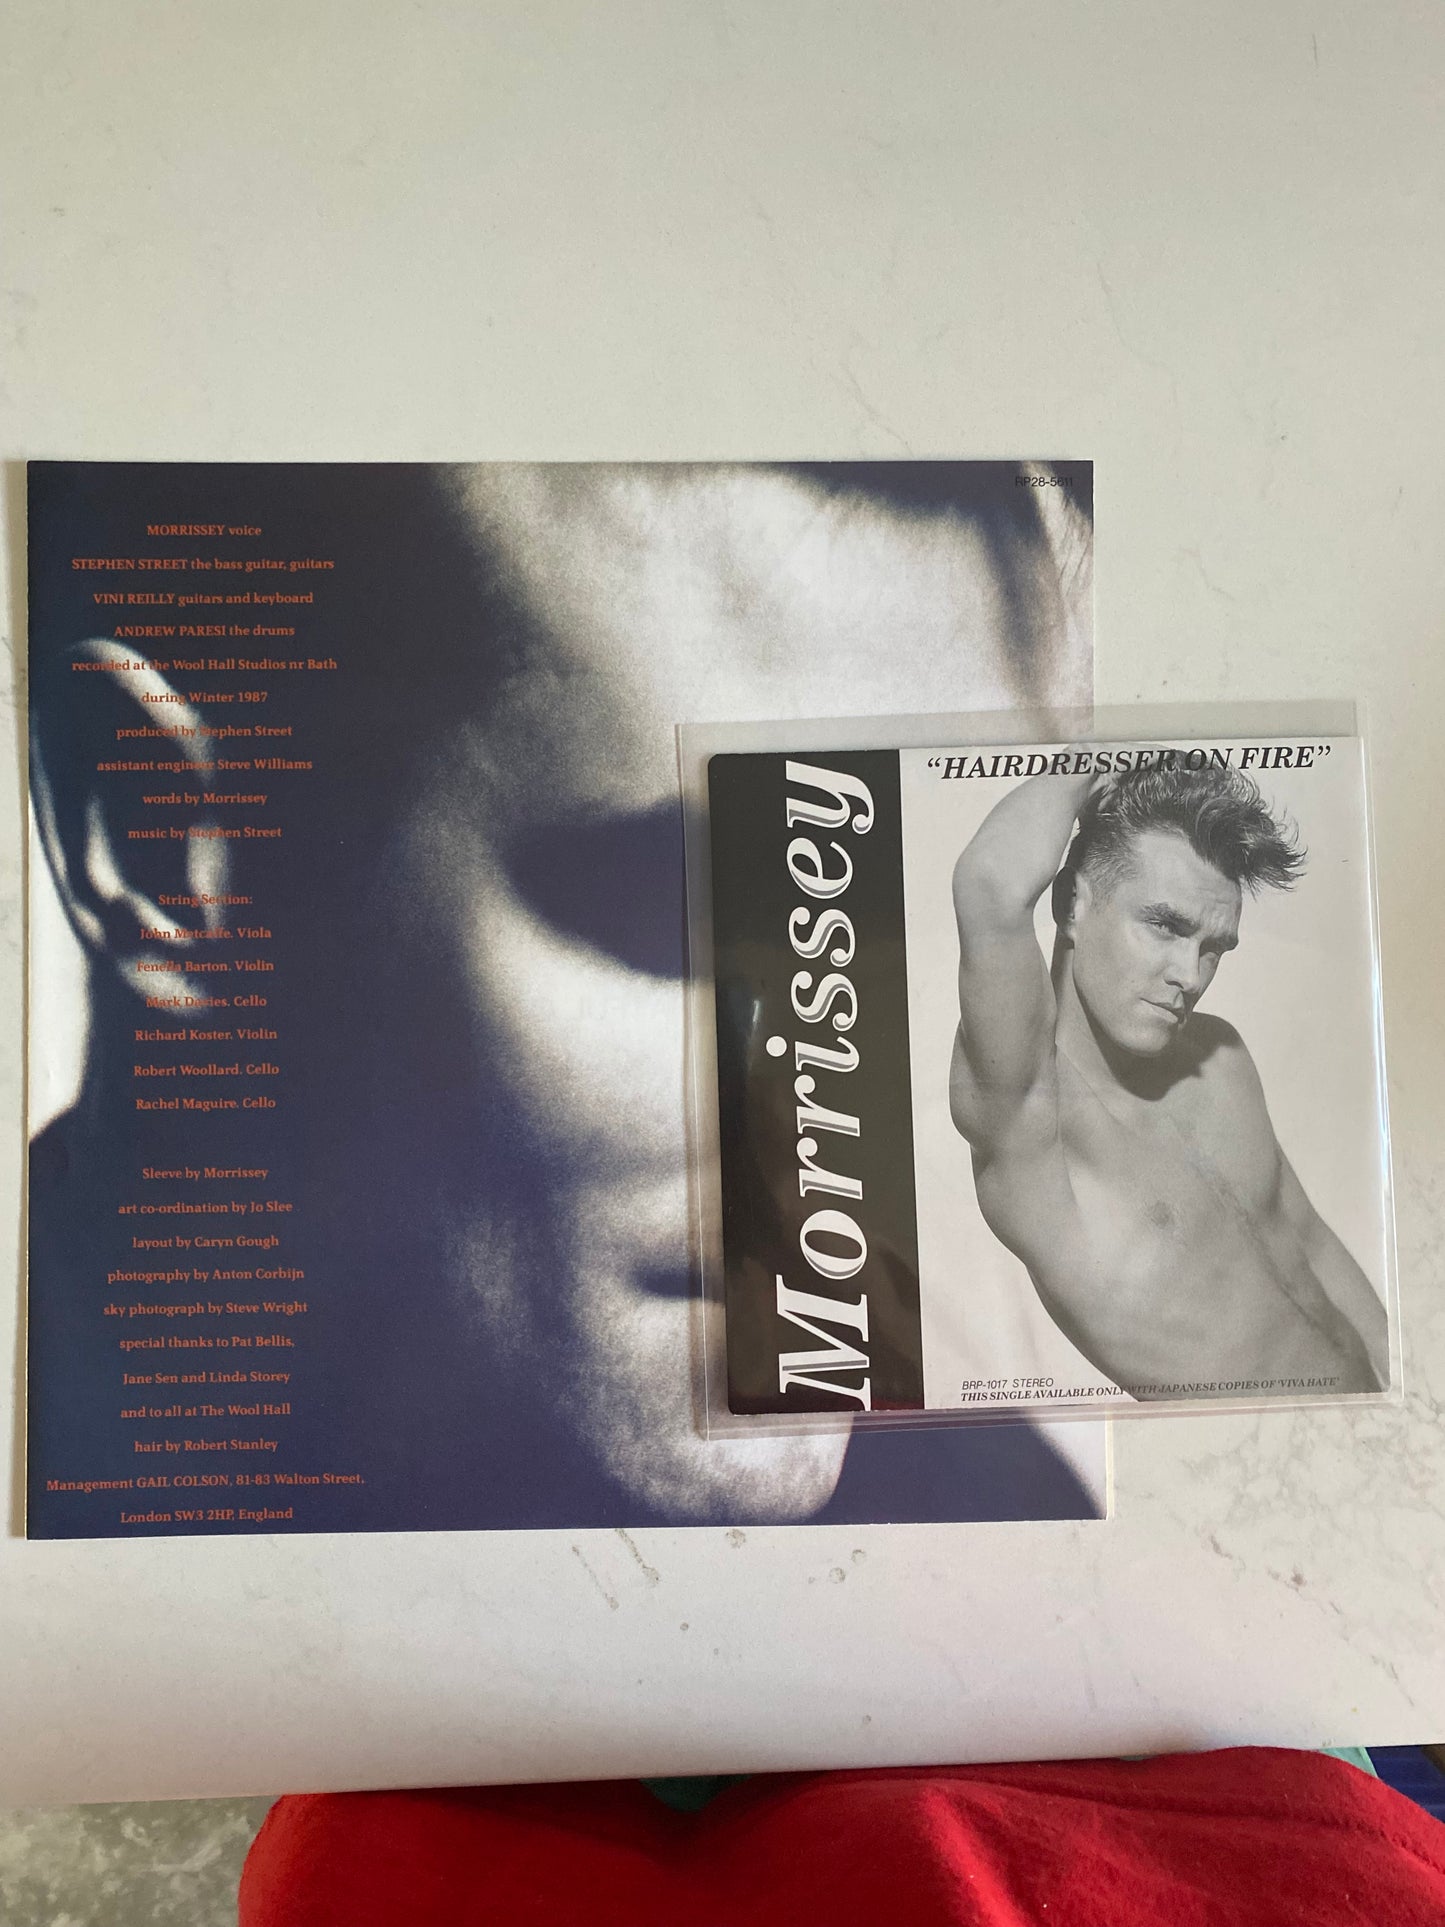 Morrissey - Viva Hate (LP, Album + 7", S/Sided, Single, Etch). ROCK